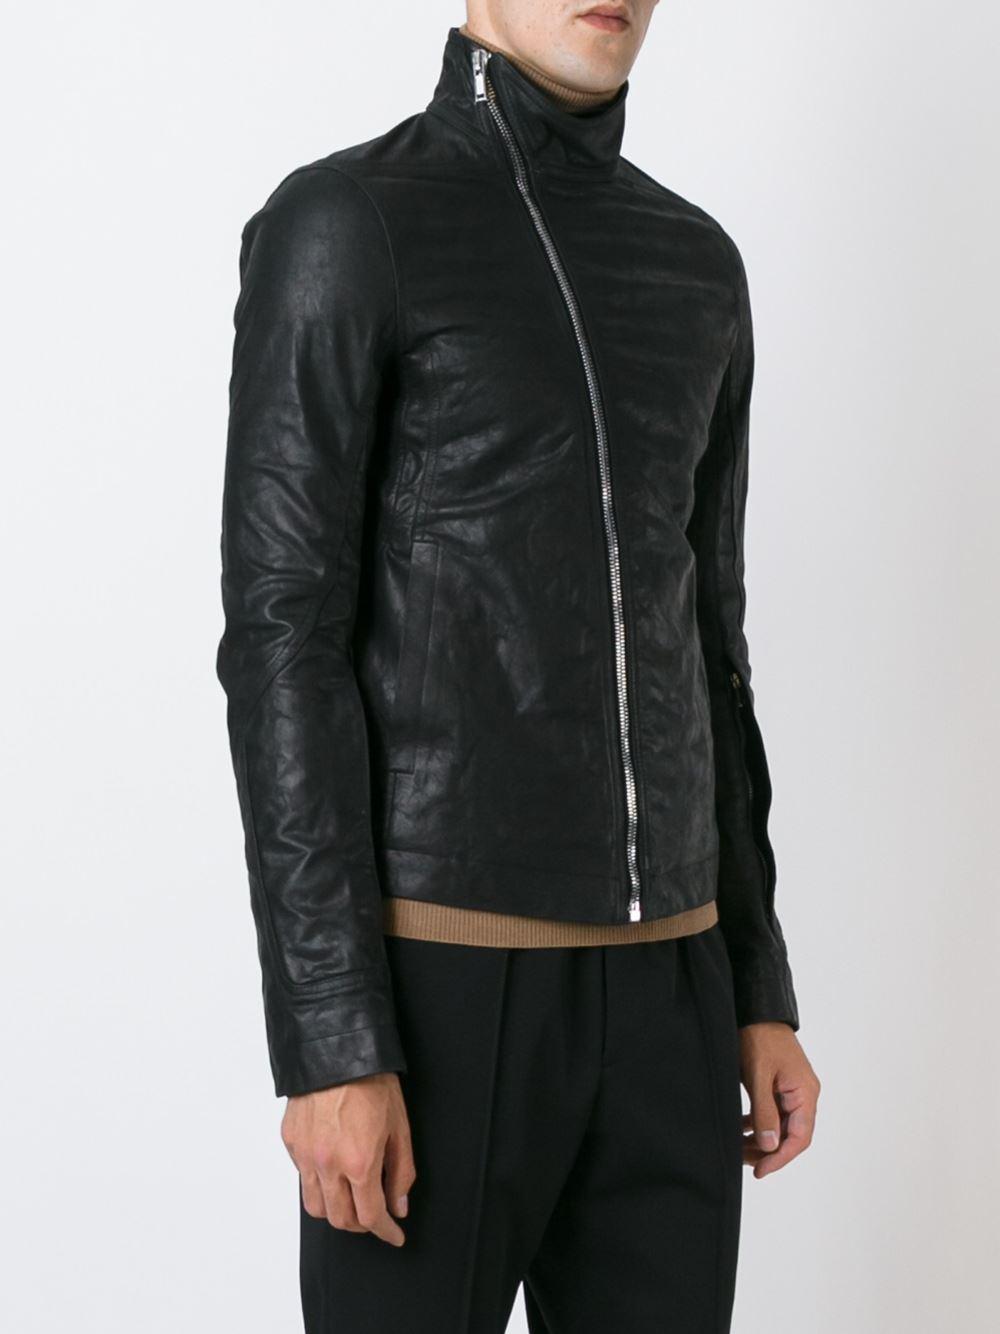 Rick Owens Leather Jacket in Black for Men - Lyst